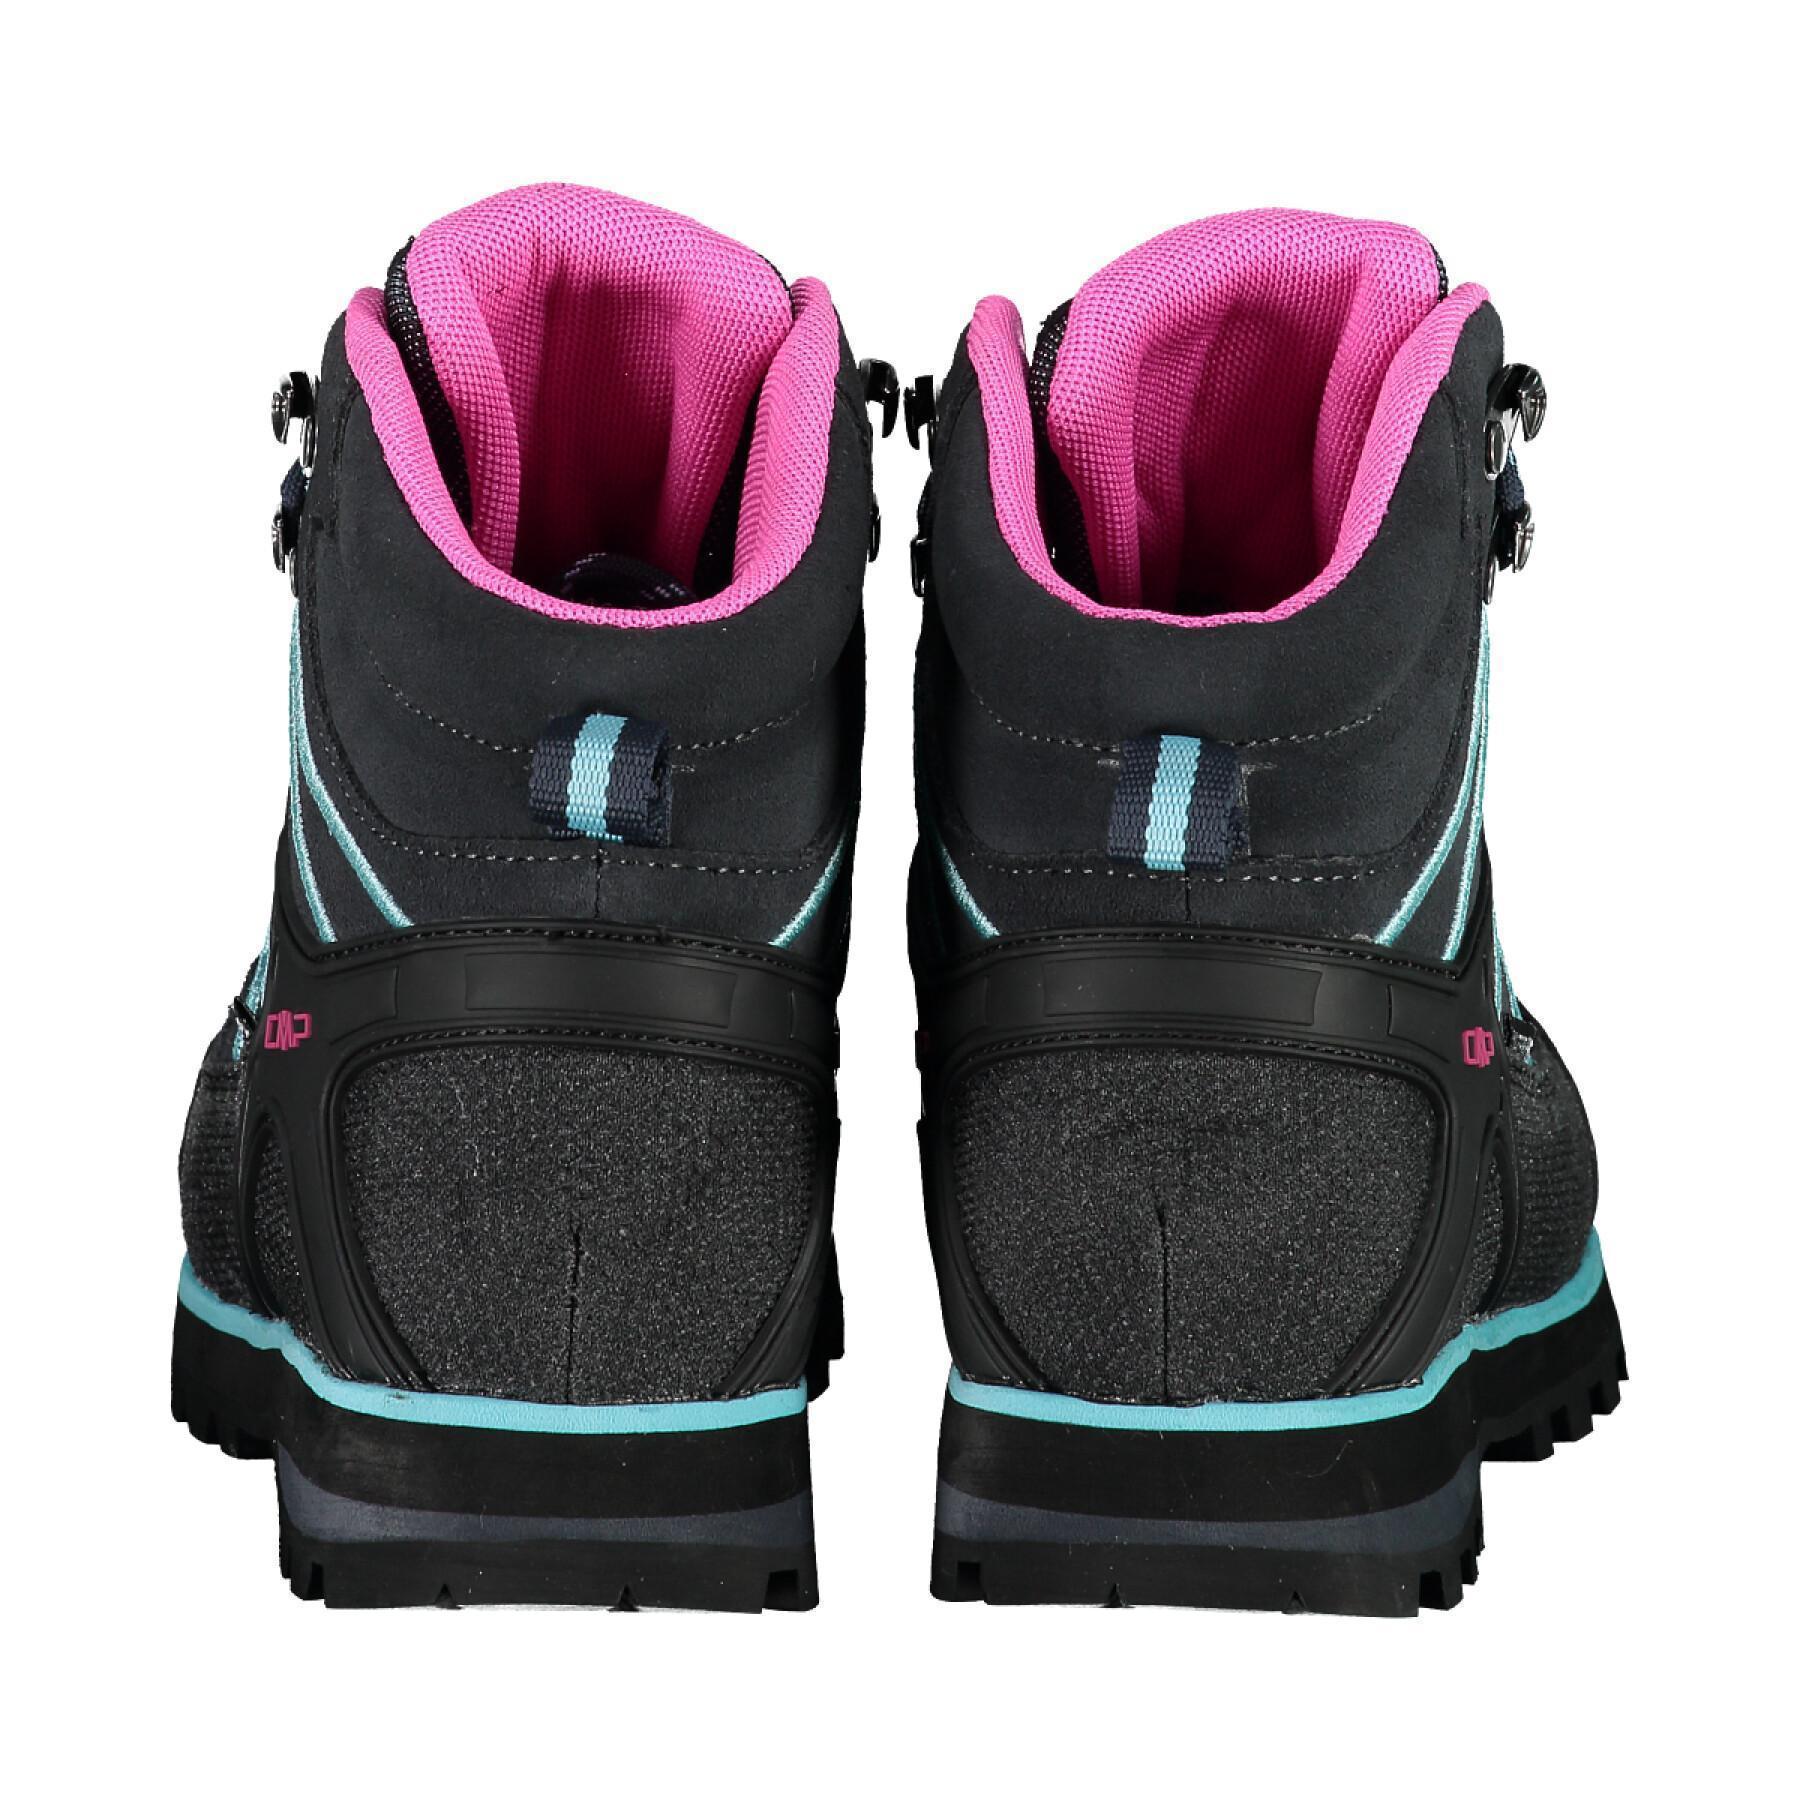 Mid hiking shoes for women CMP Moon waterprof